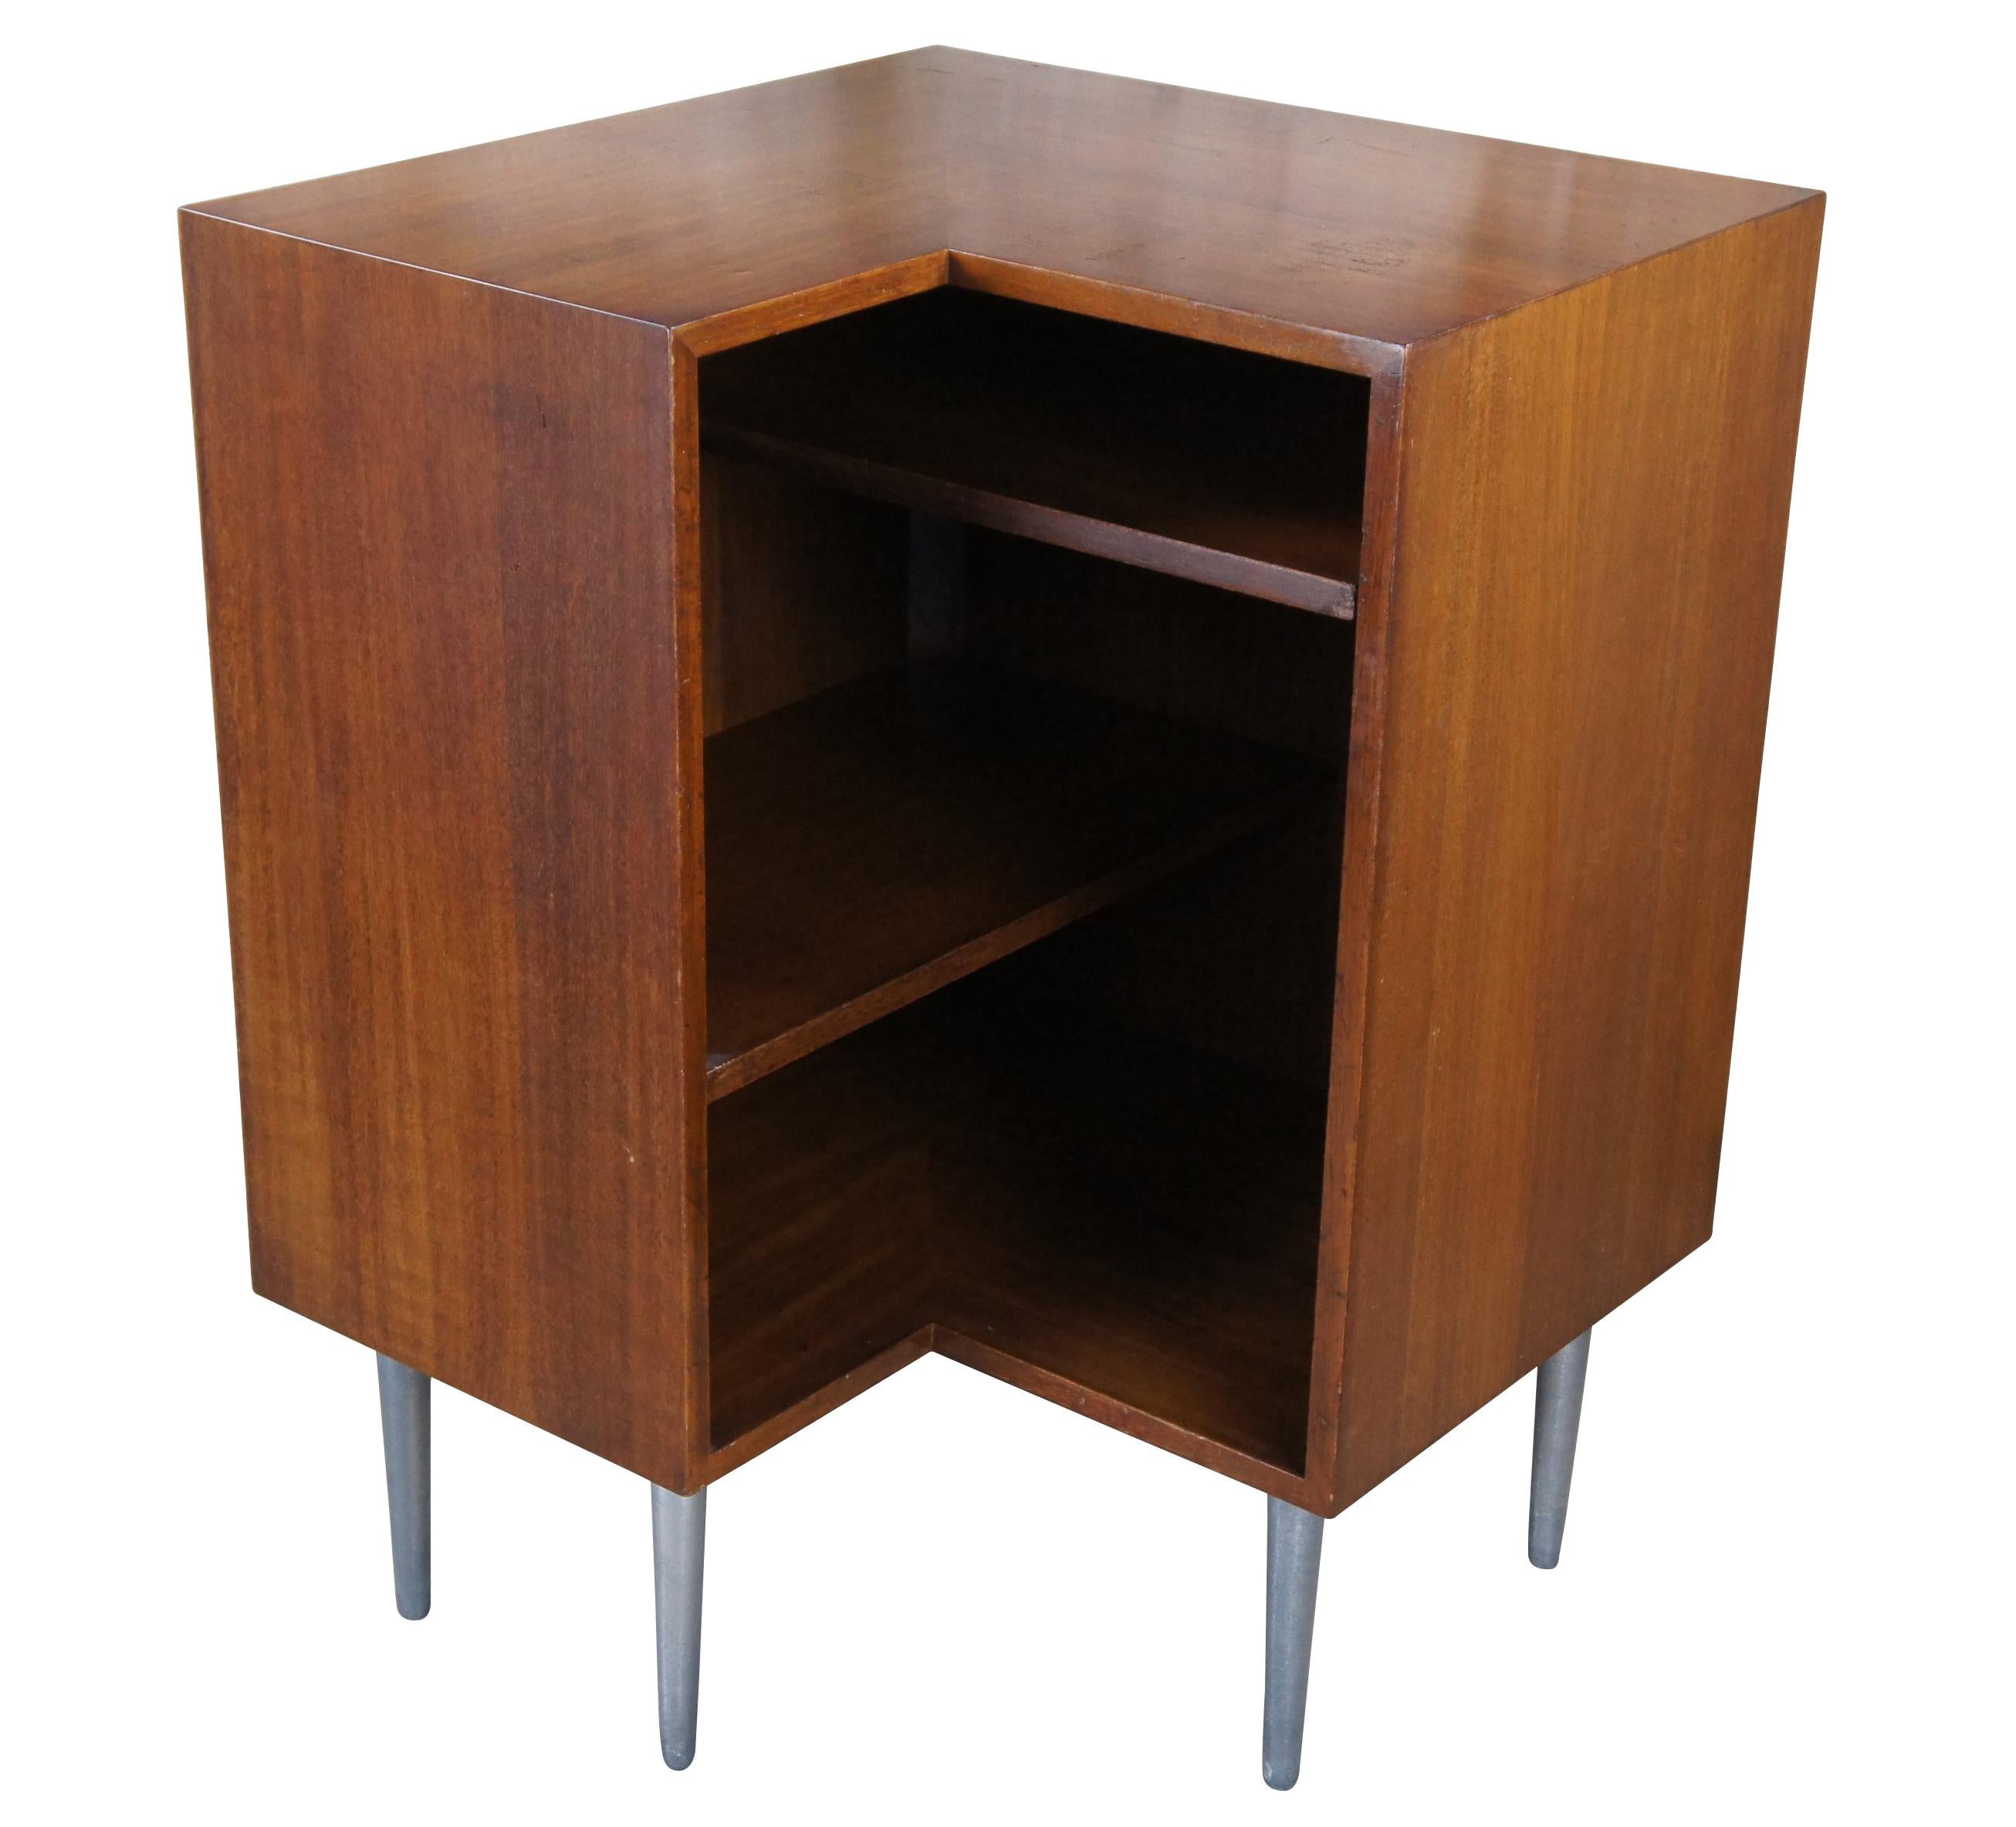 Mid-Century Modern Edward Wormley for Dunbar Furniture corner bookcase record console. Made of walnut featuring modular cubist 